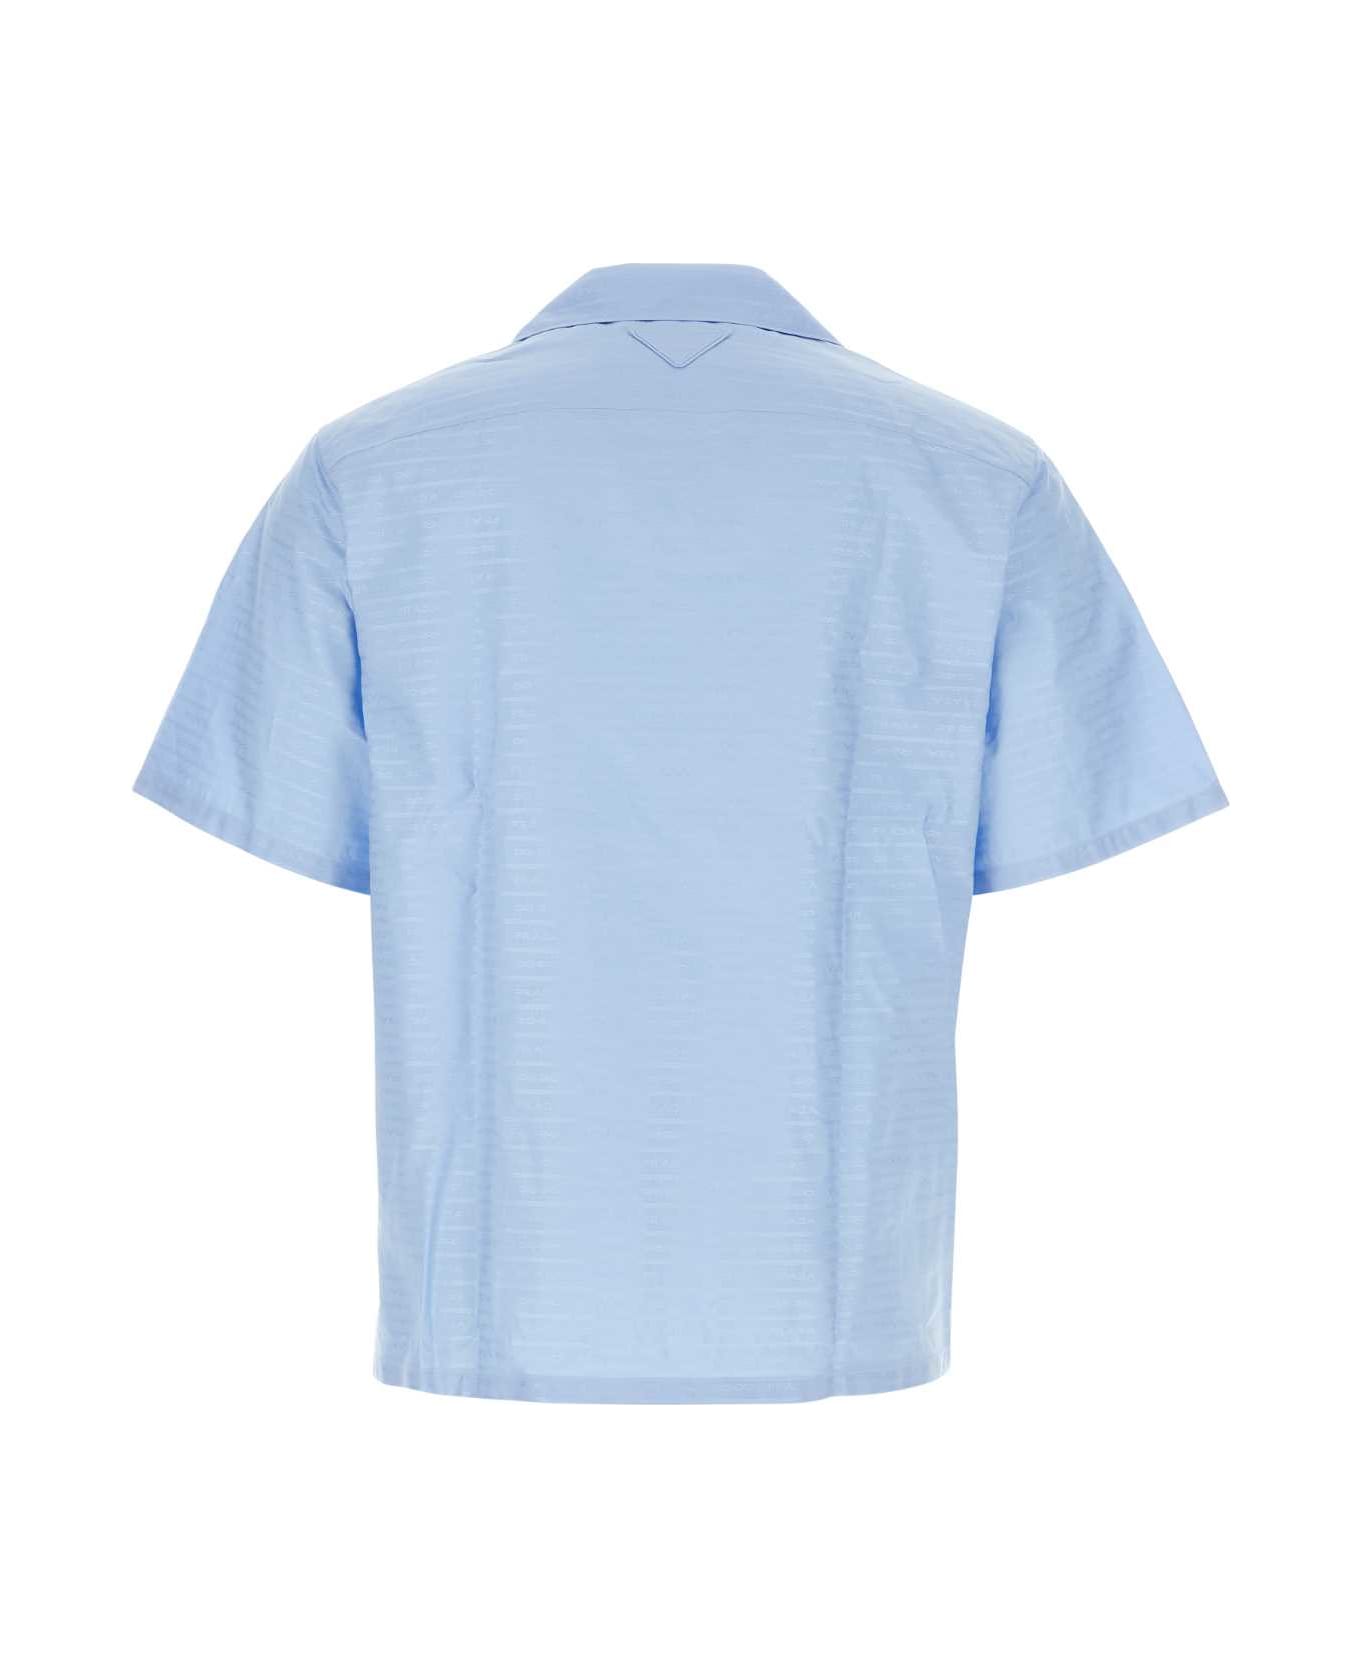 Prada Embroidered Poplin Shirt - CIELO